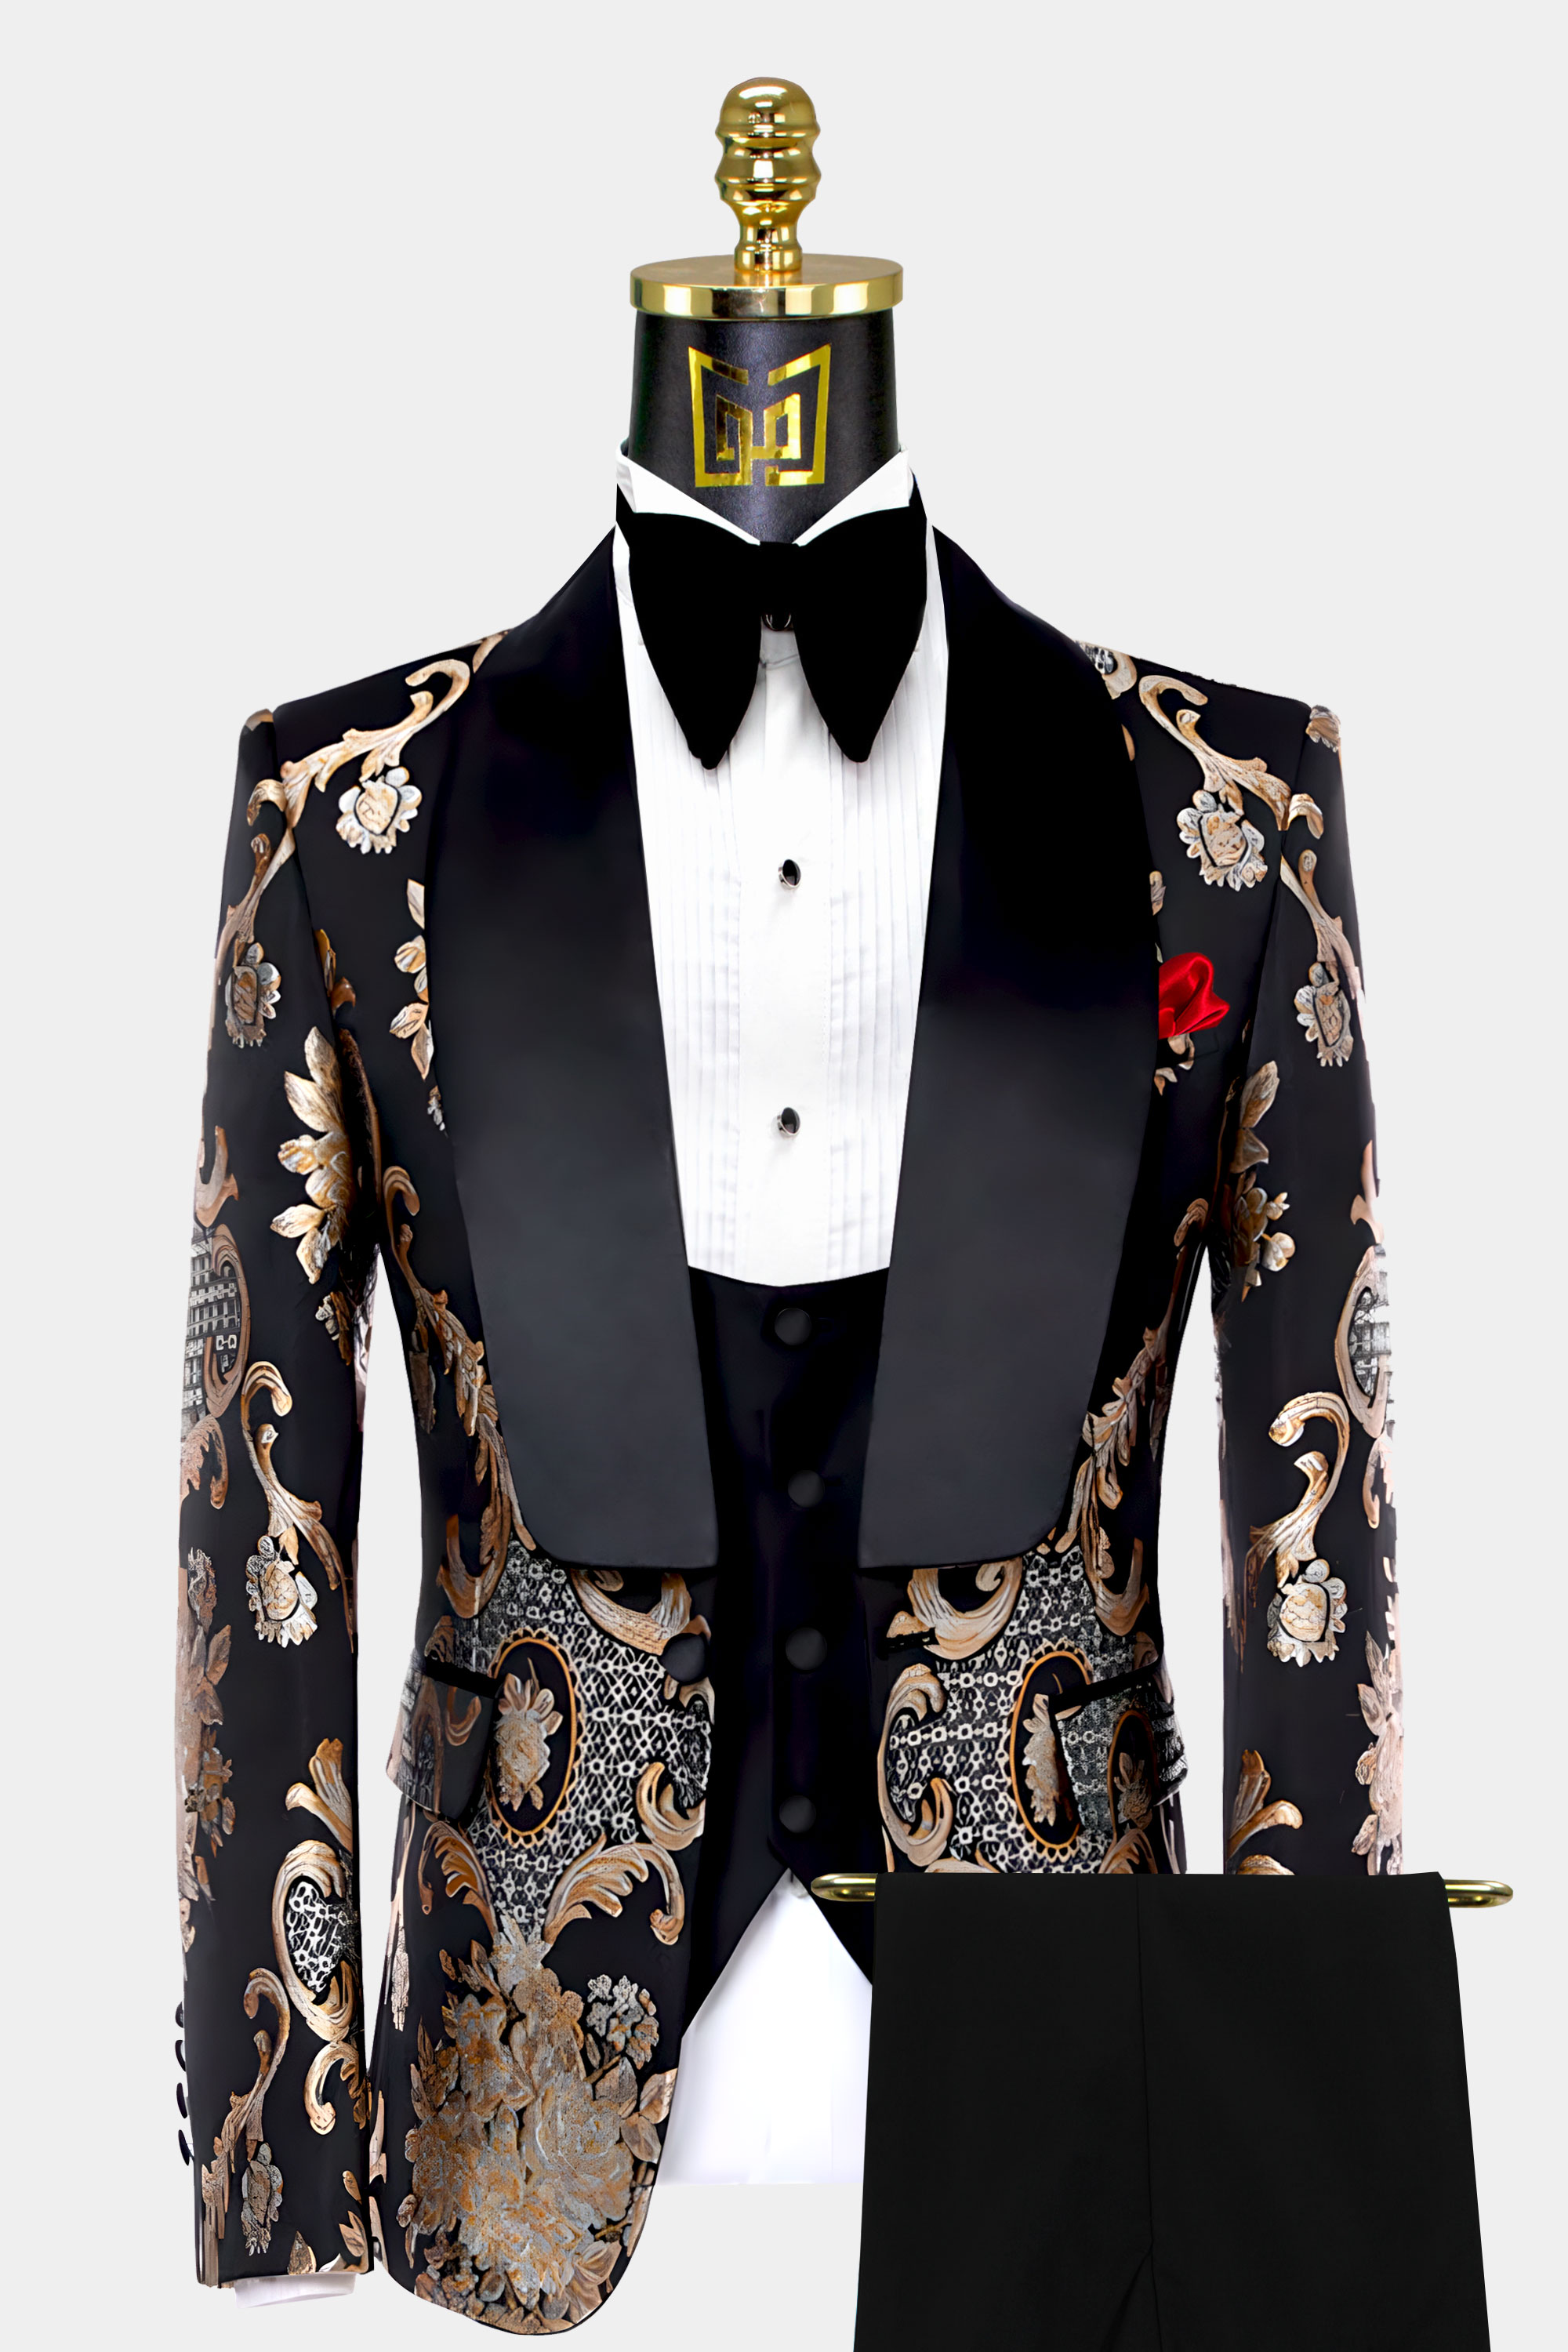 Champagne-and-Black-Tuxedo-Wedding-Groom-Prom-Suit-from-Gentlemansguru.com